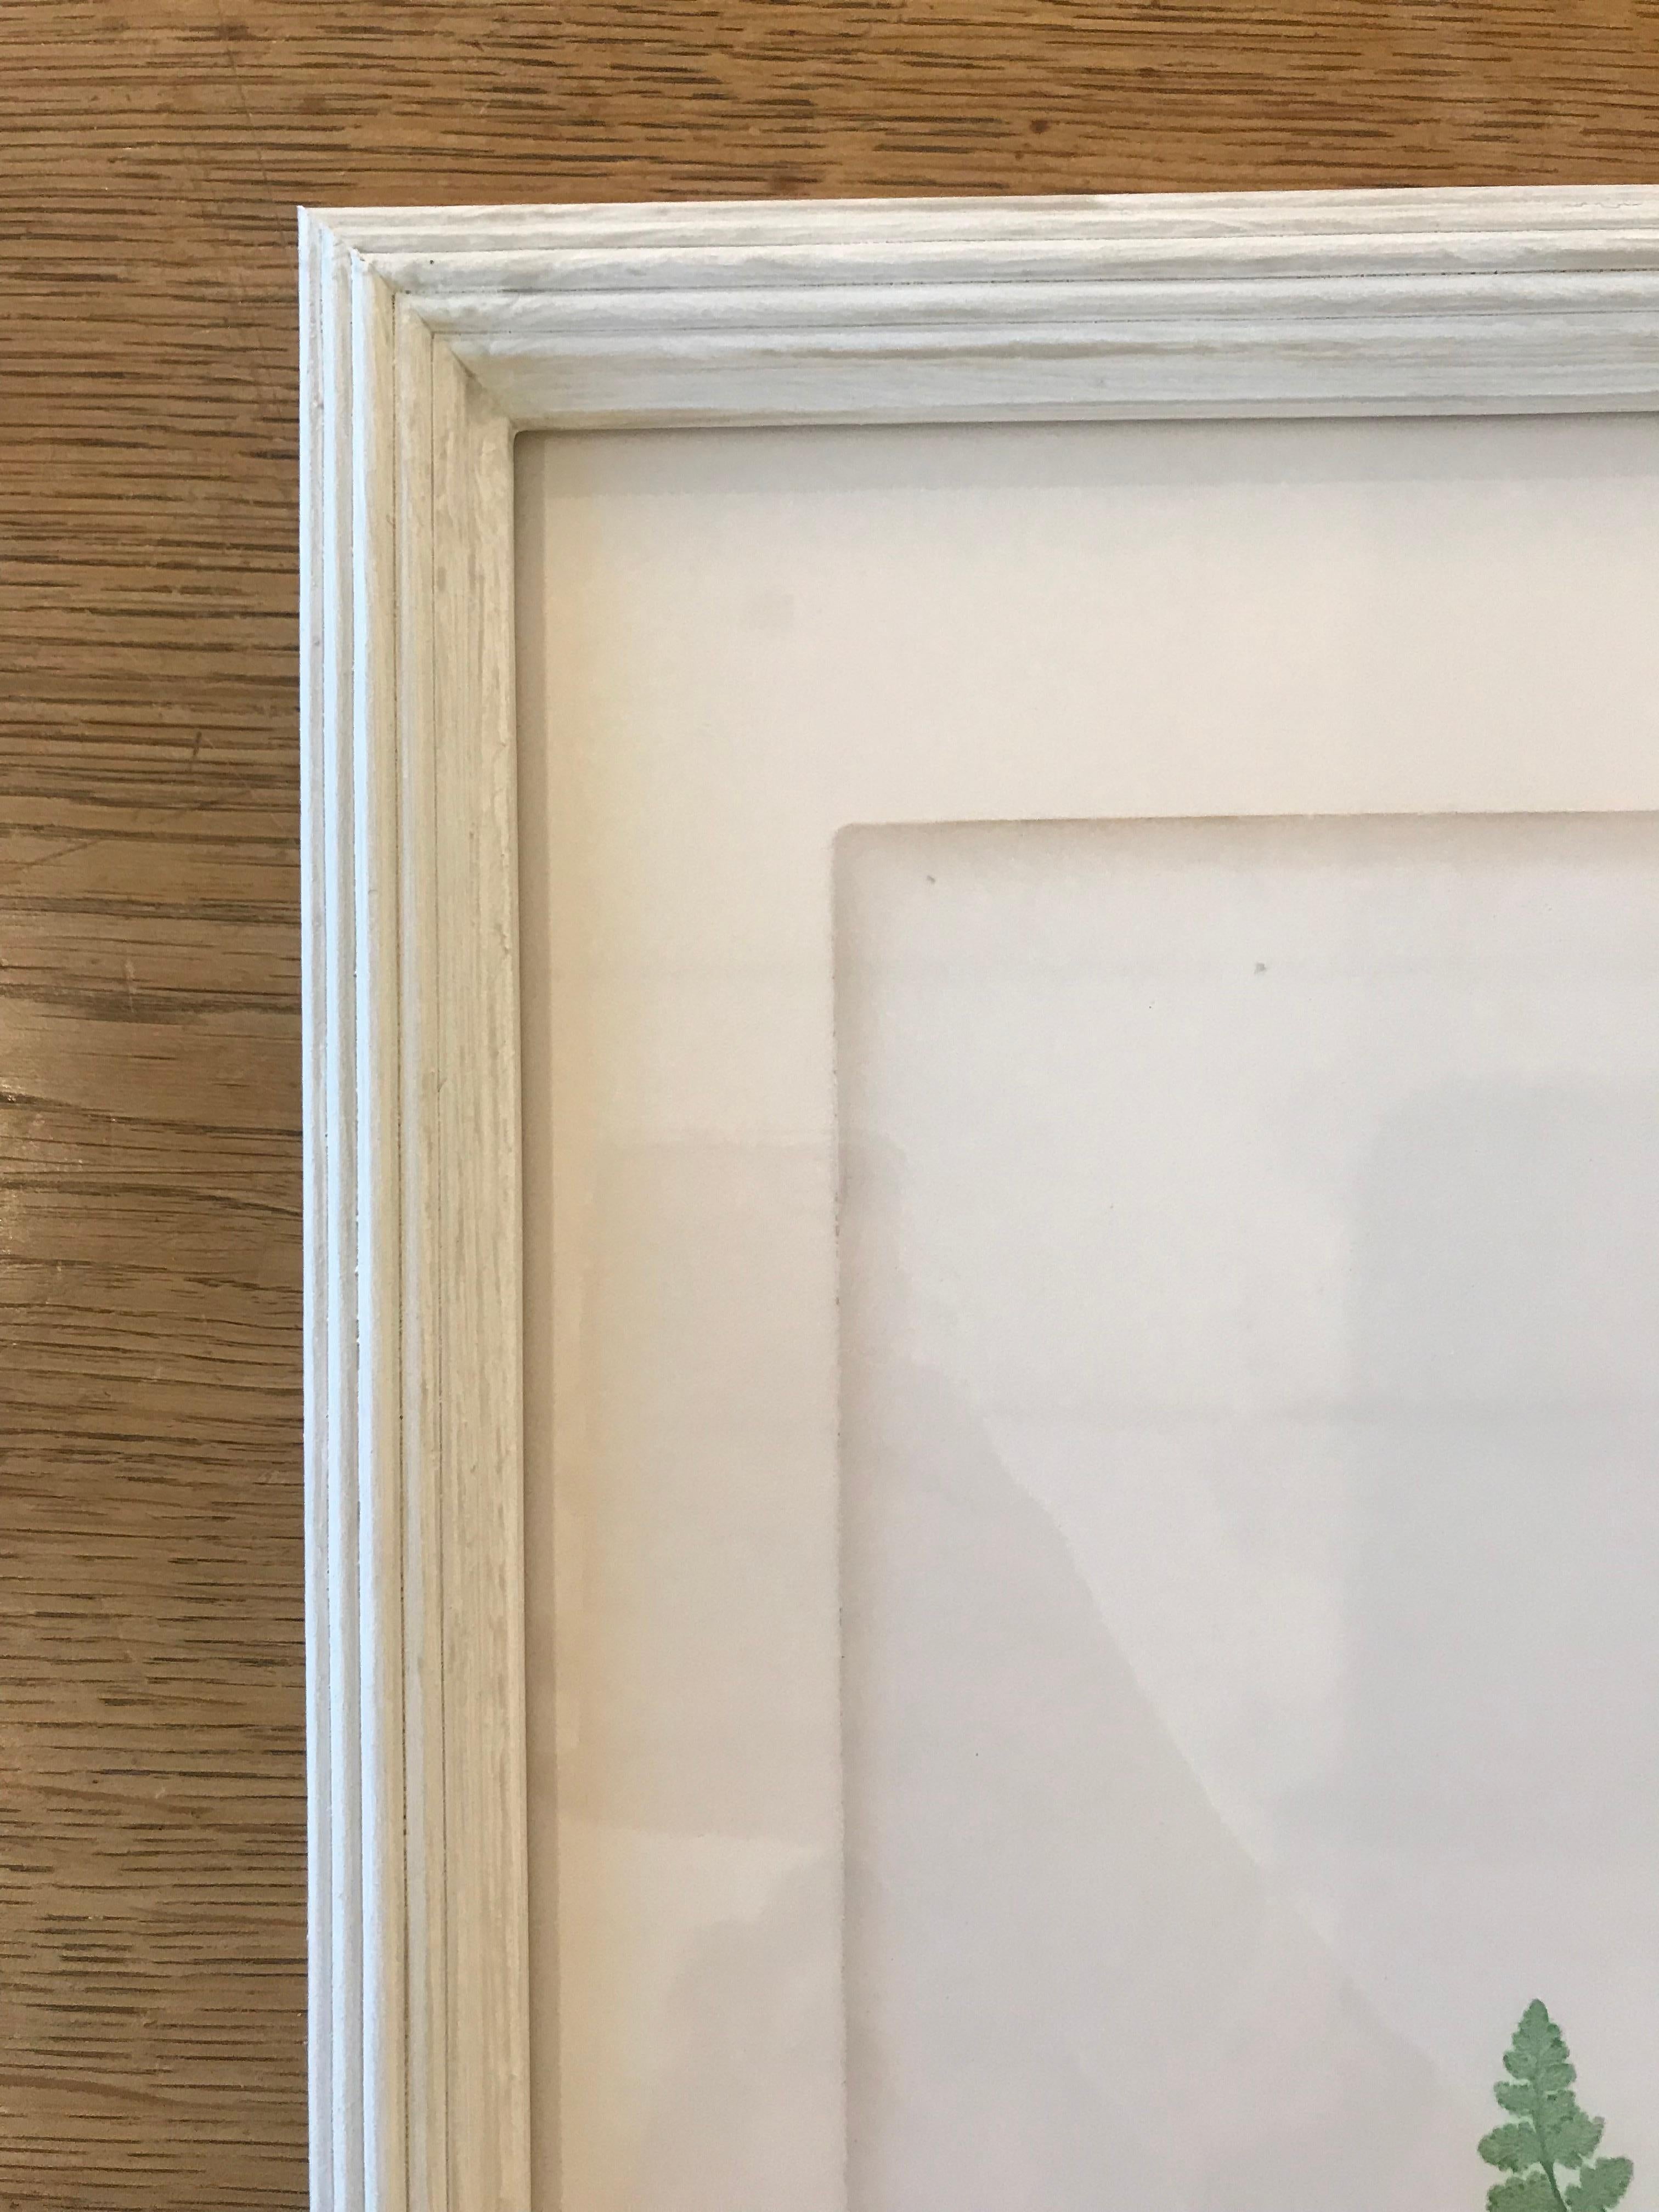 Rare process involving live specimens pressed into printing plates, circa 1855. Custom framing with conservation glass.

Plate XLVII.